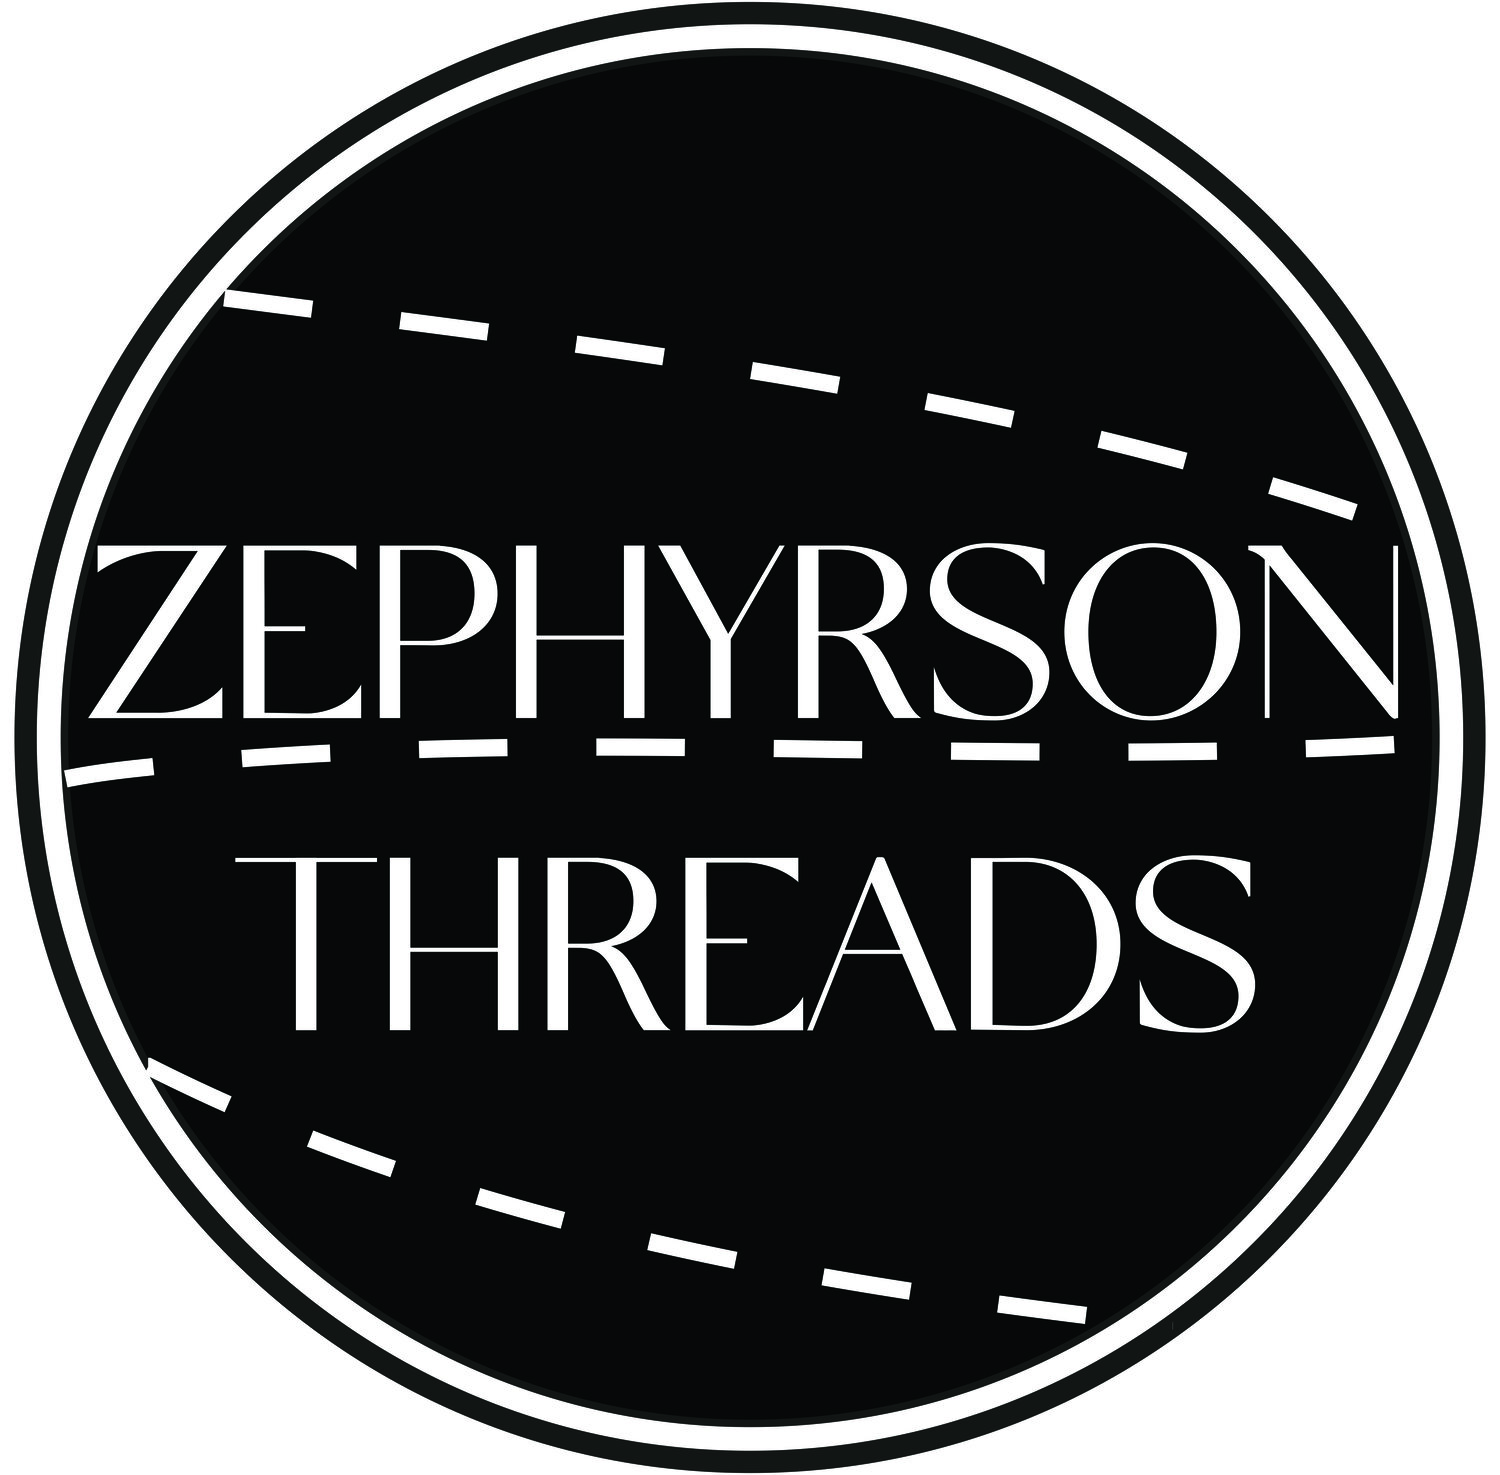 Zephyrson Threads